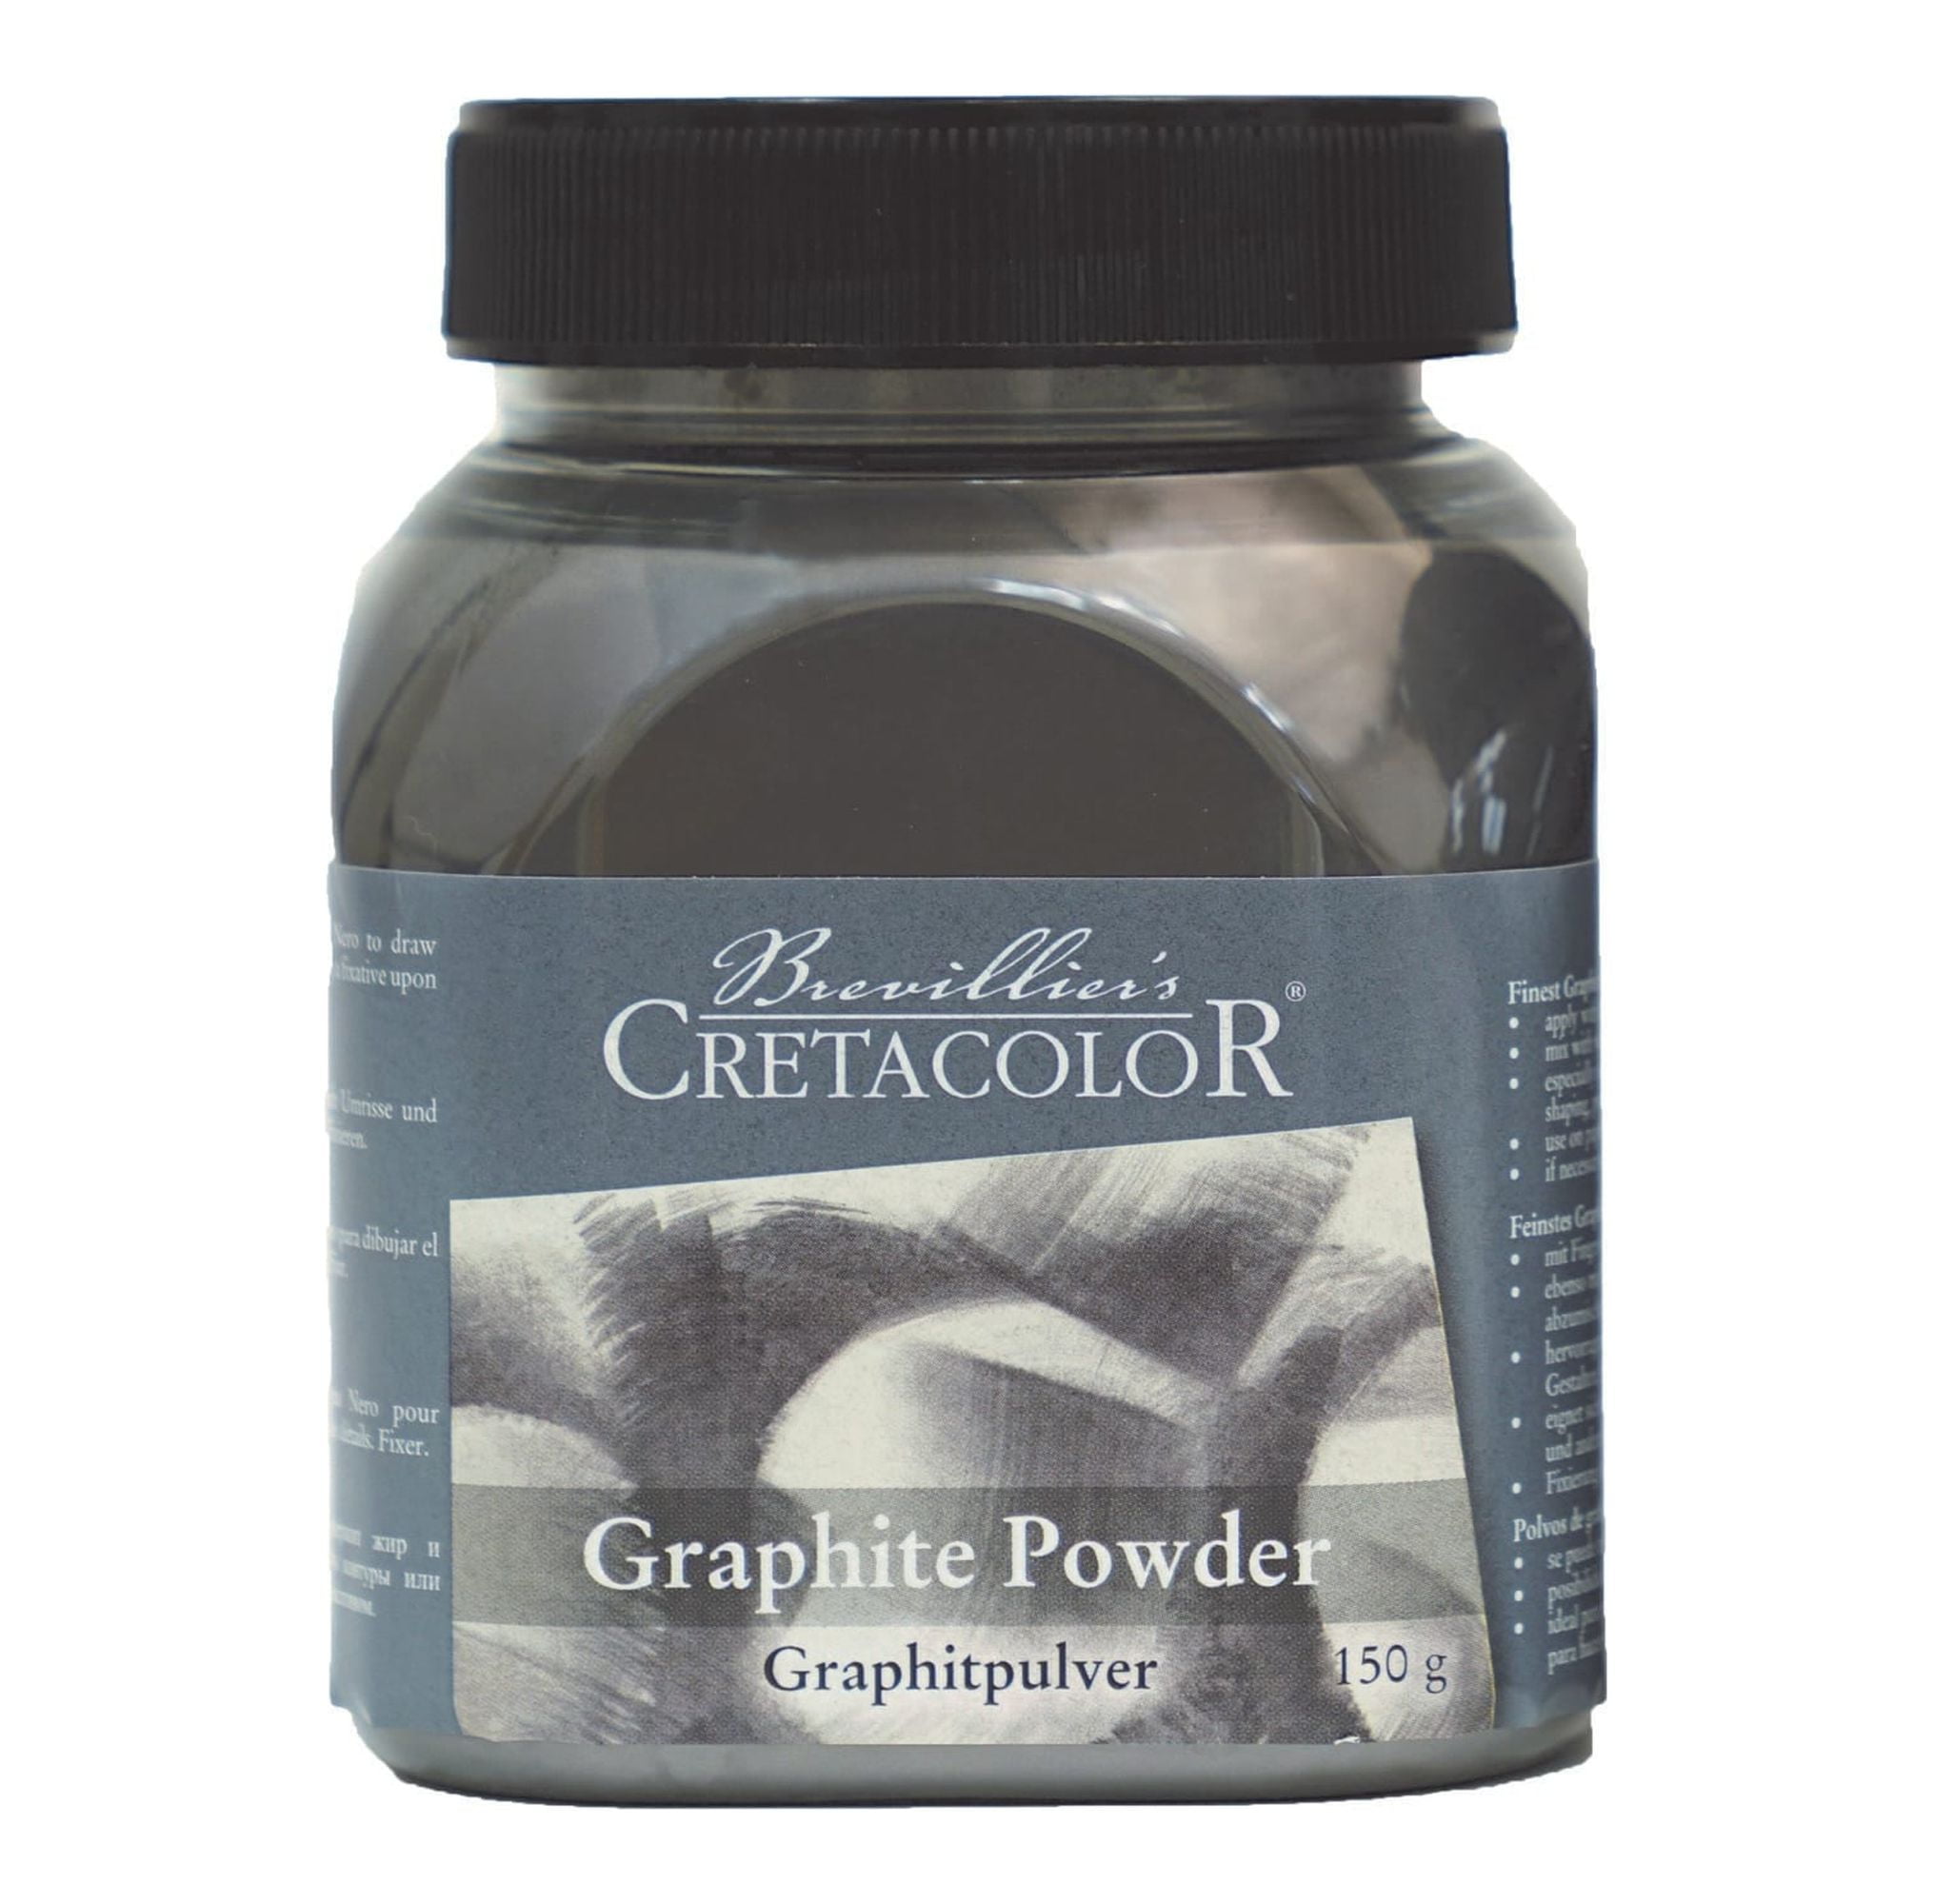  CRETACOLOR Graphite Powder, 150 gram : Beauty